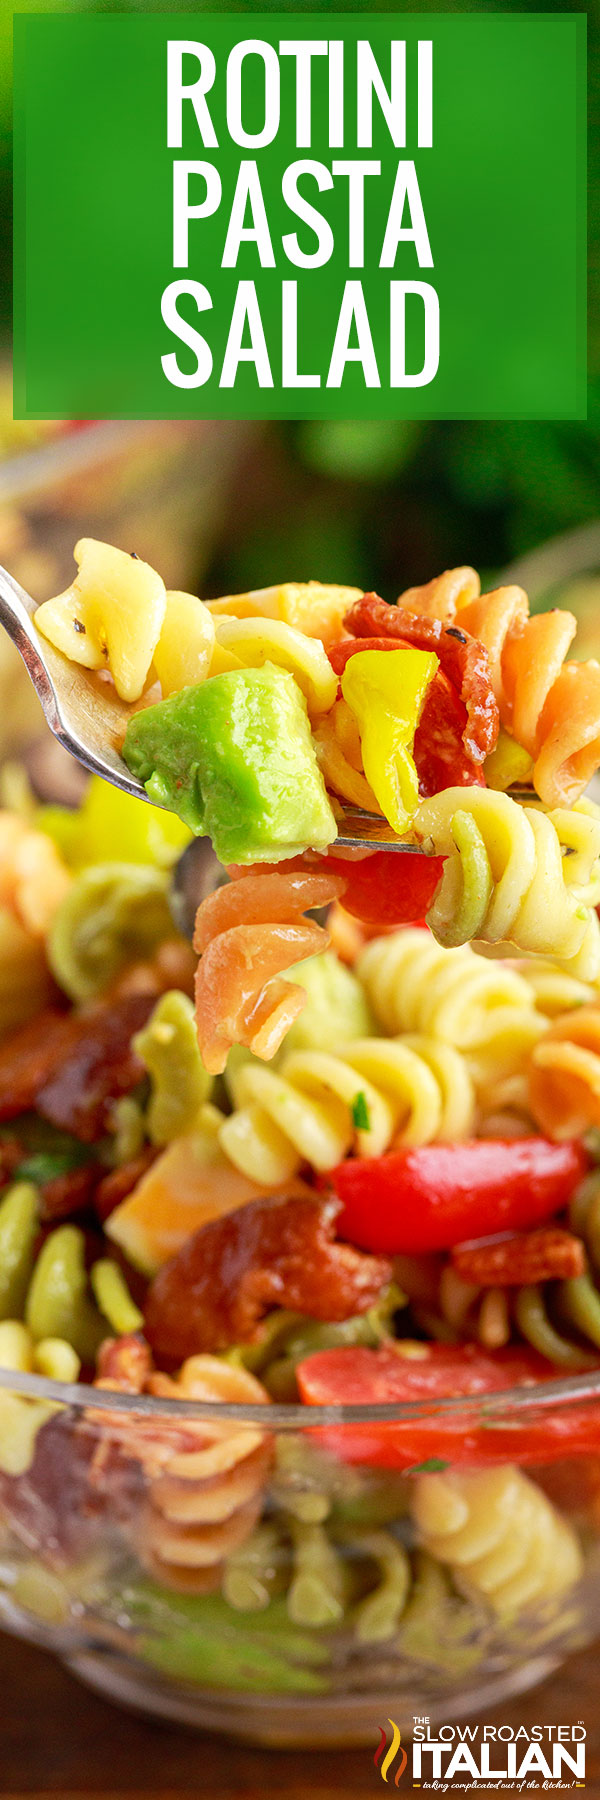 titled pinterest image for pasta salad recipe